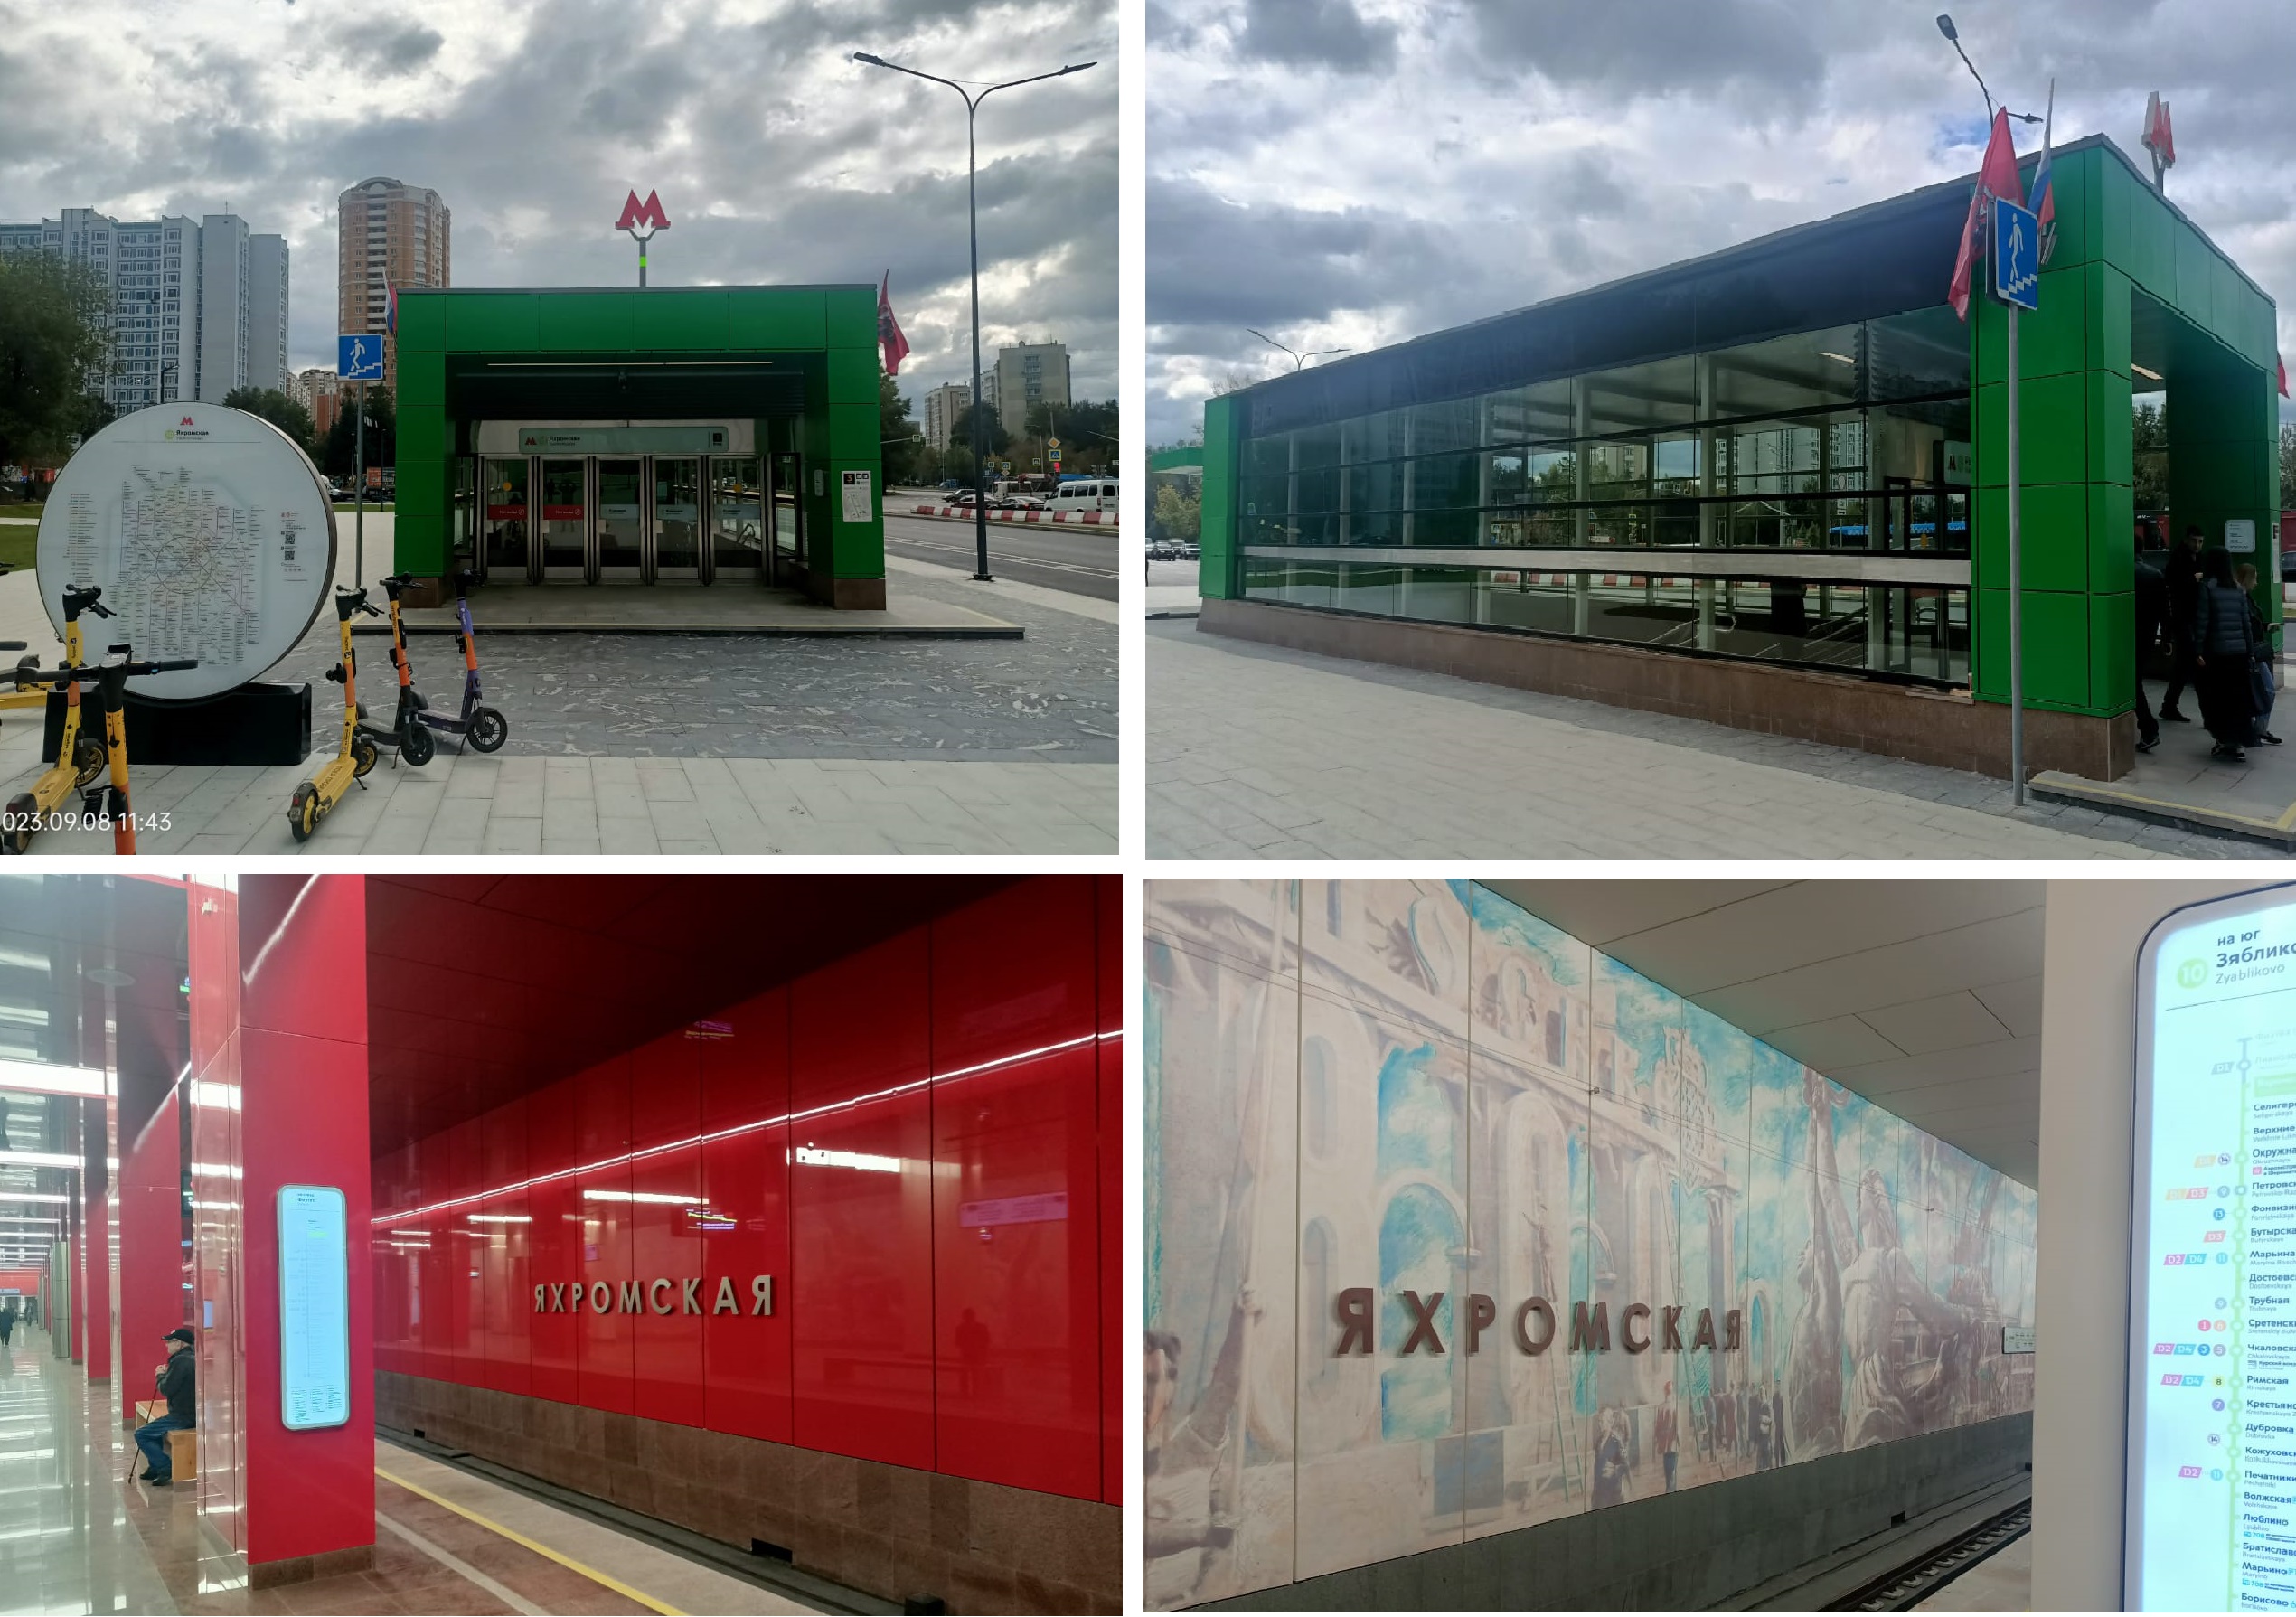 Metro station “Yakhromskaya” was opened on the 7th of September, 2023